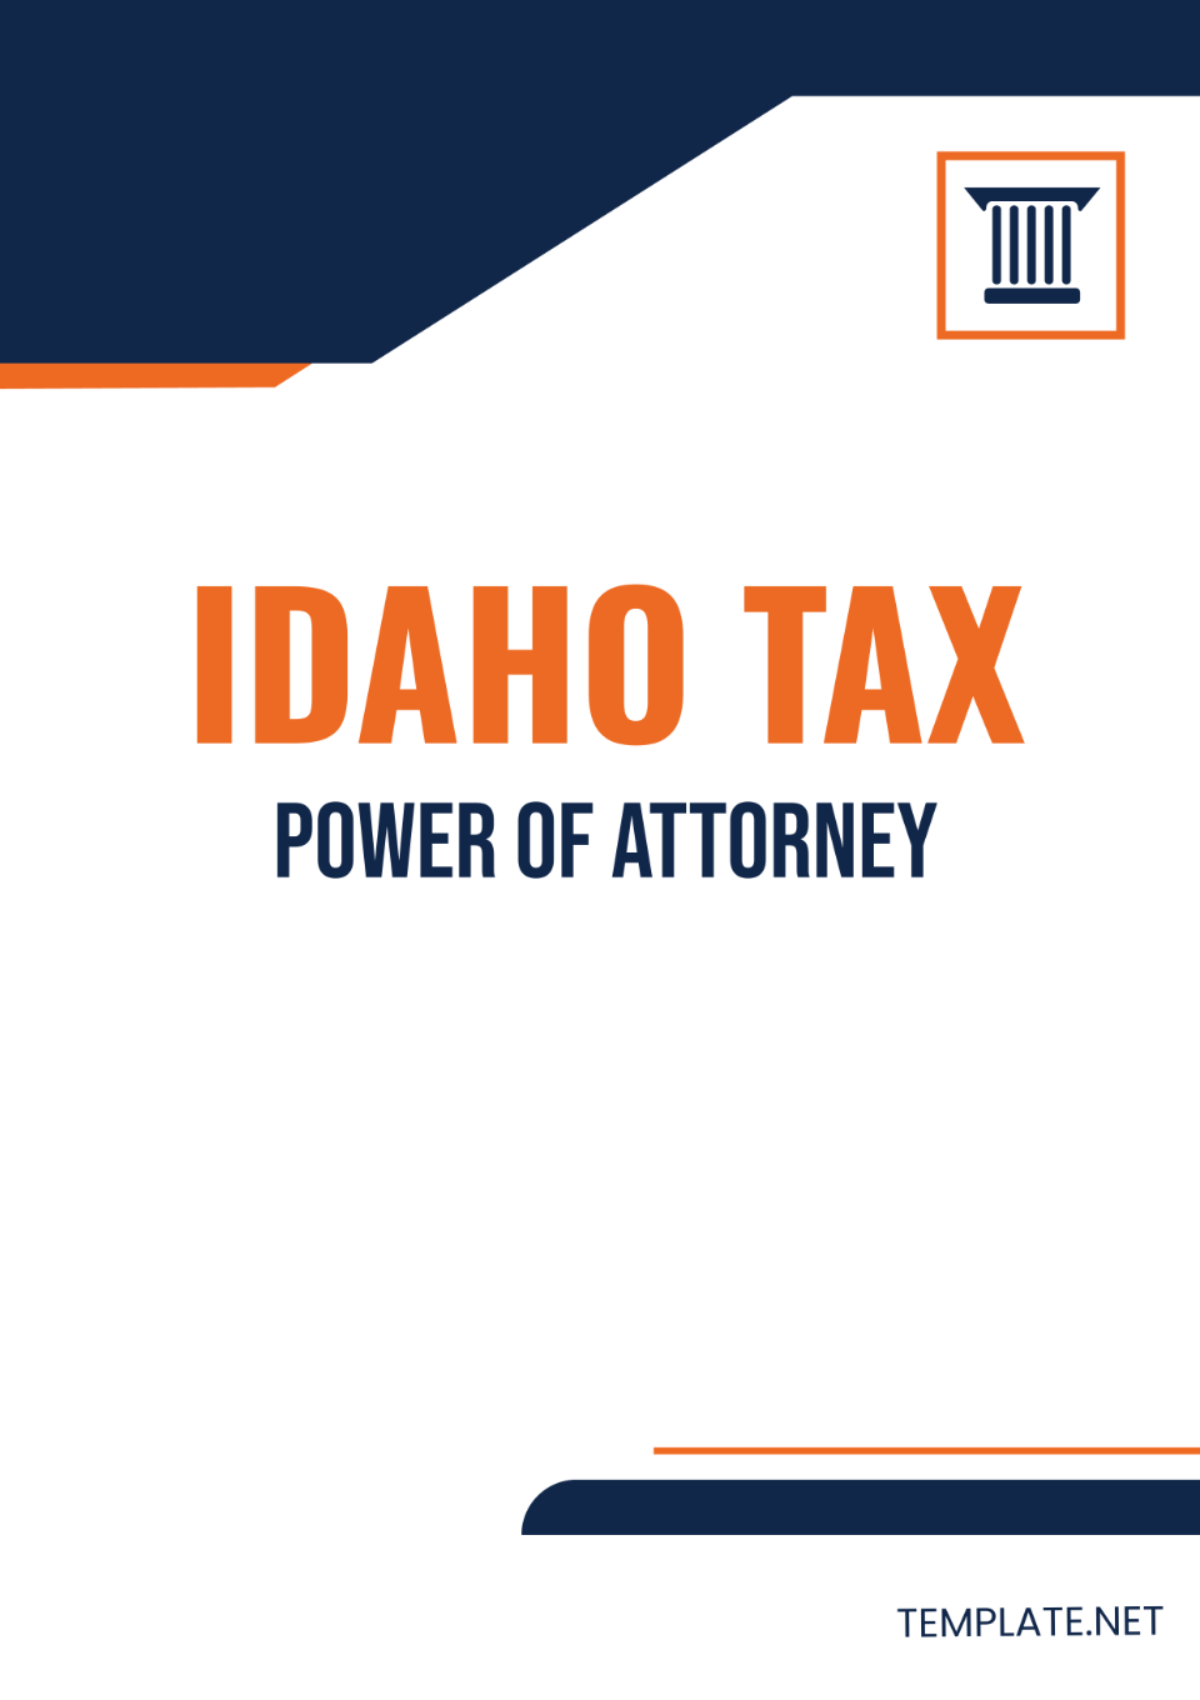 Idaho Tax Power of Attorney Template